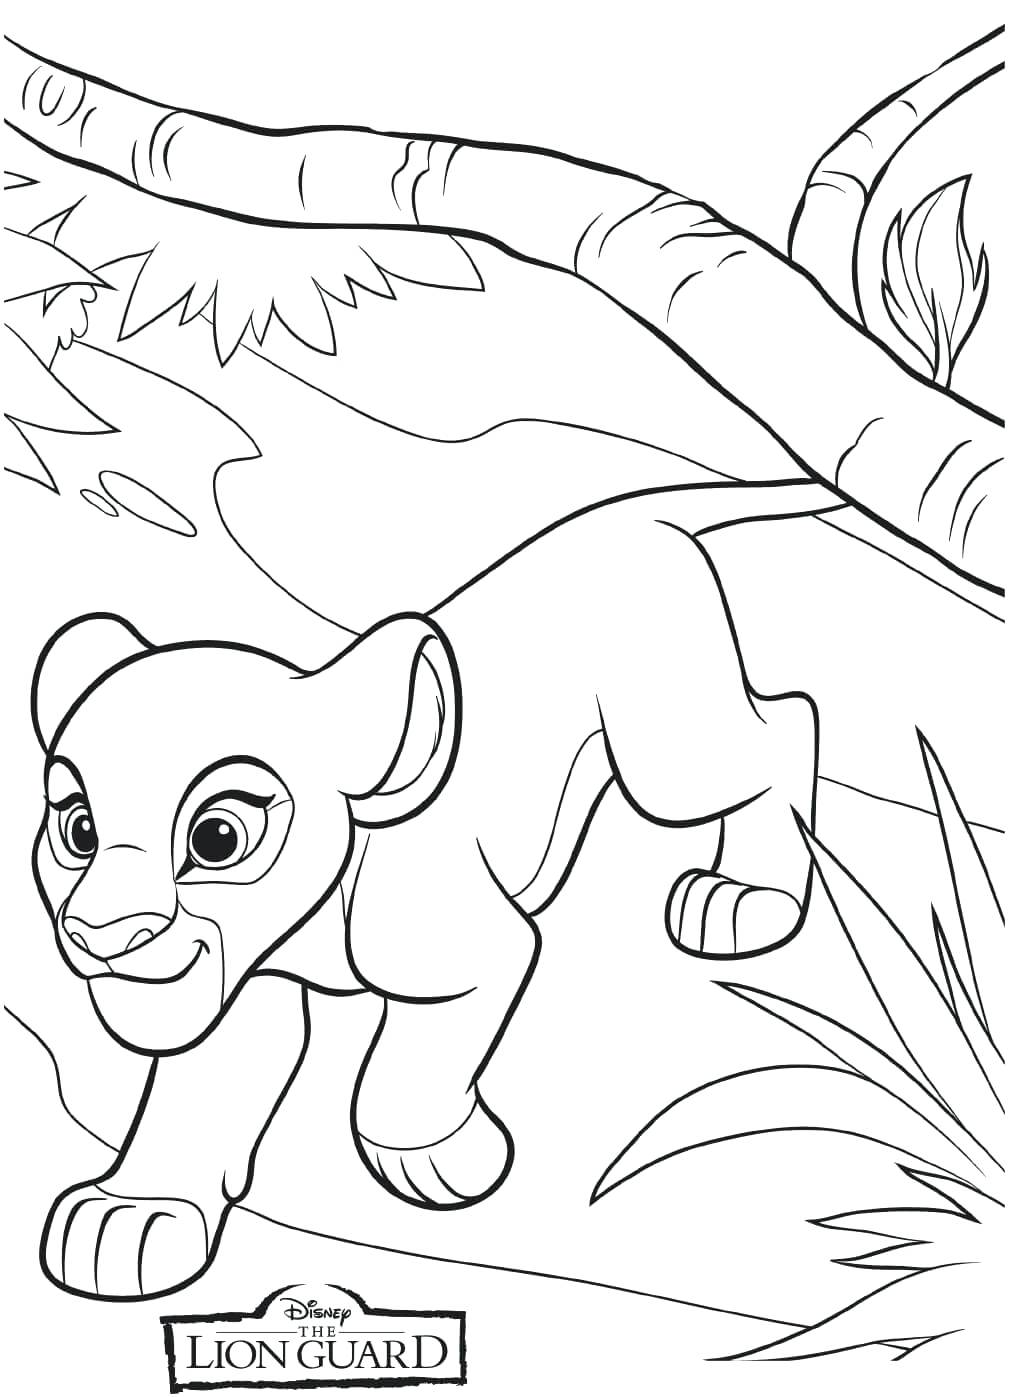 Kiara Lion Guards Coloring Page